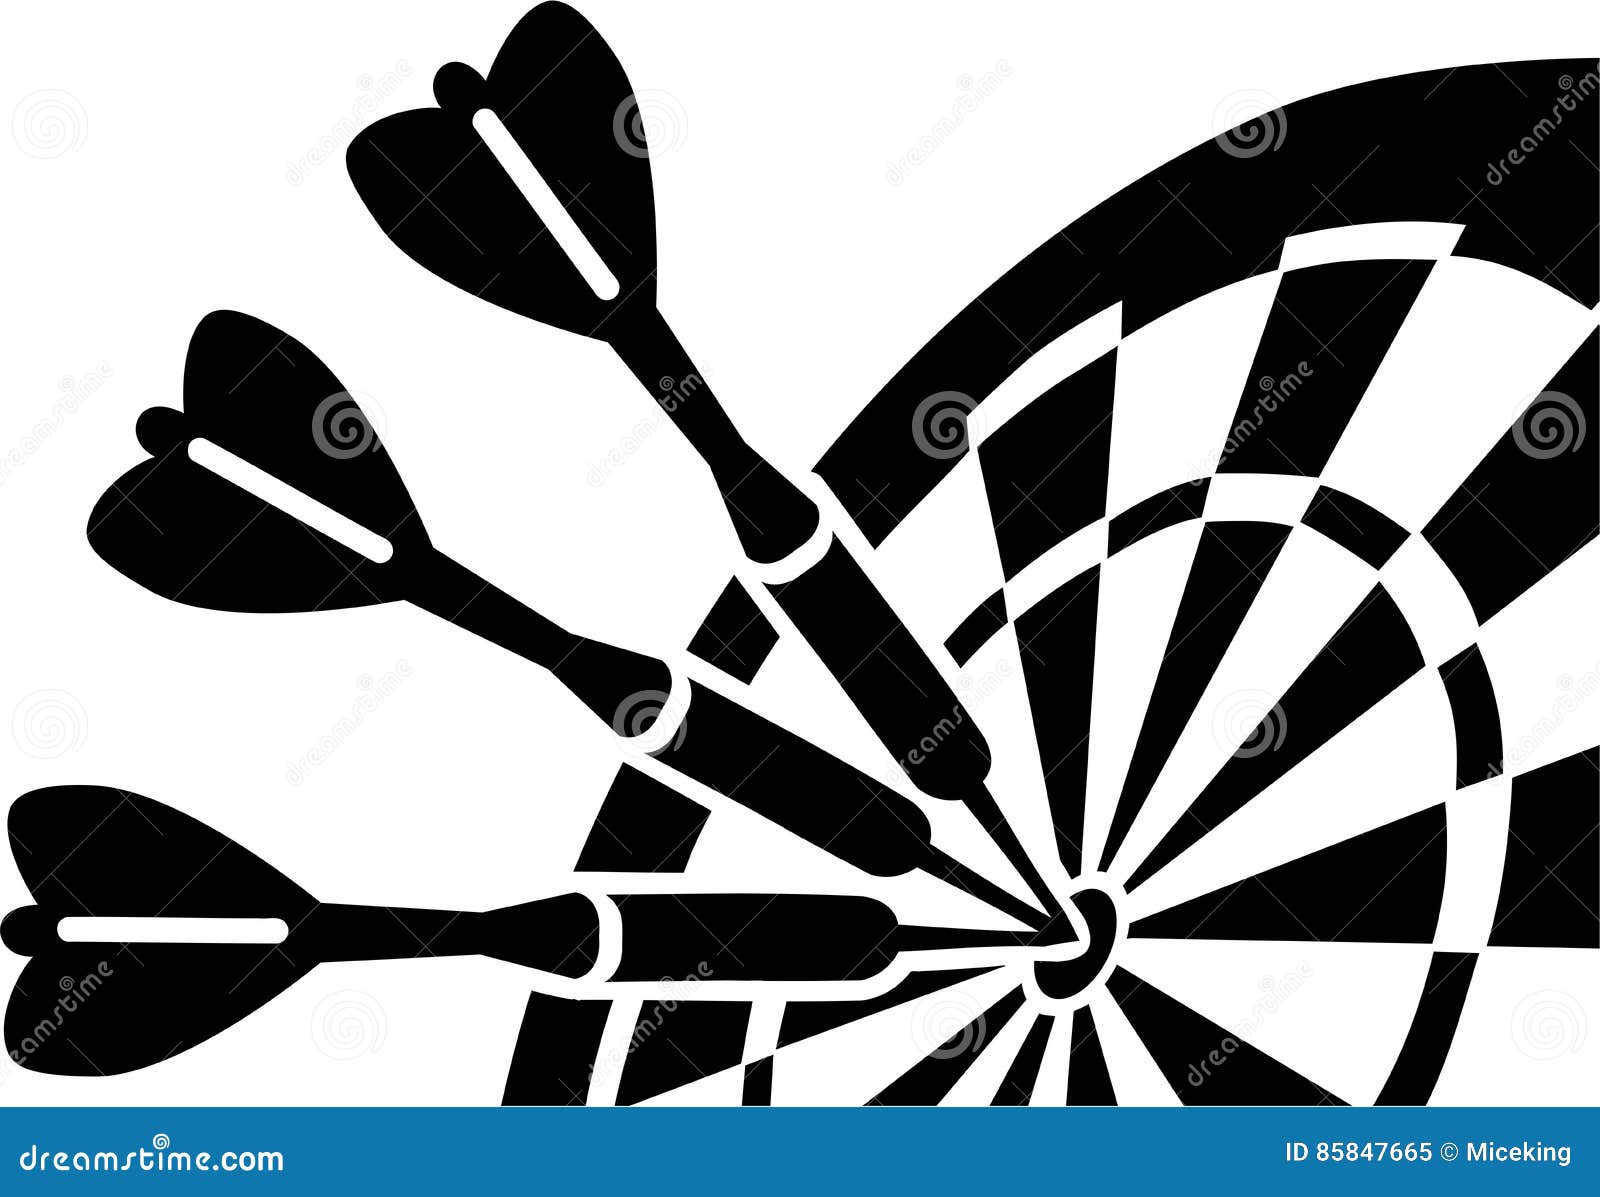 dartboard with darts